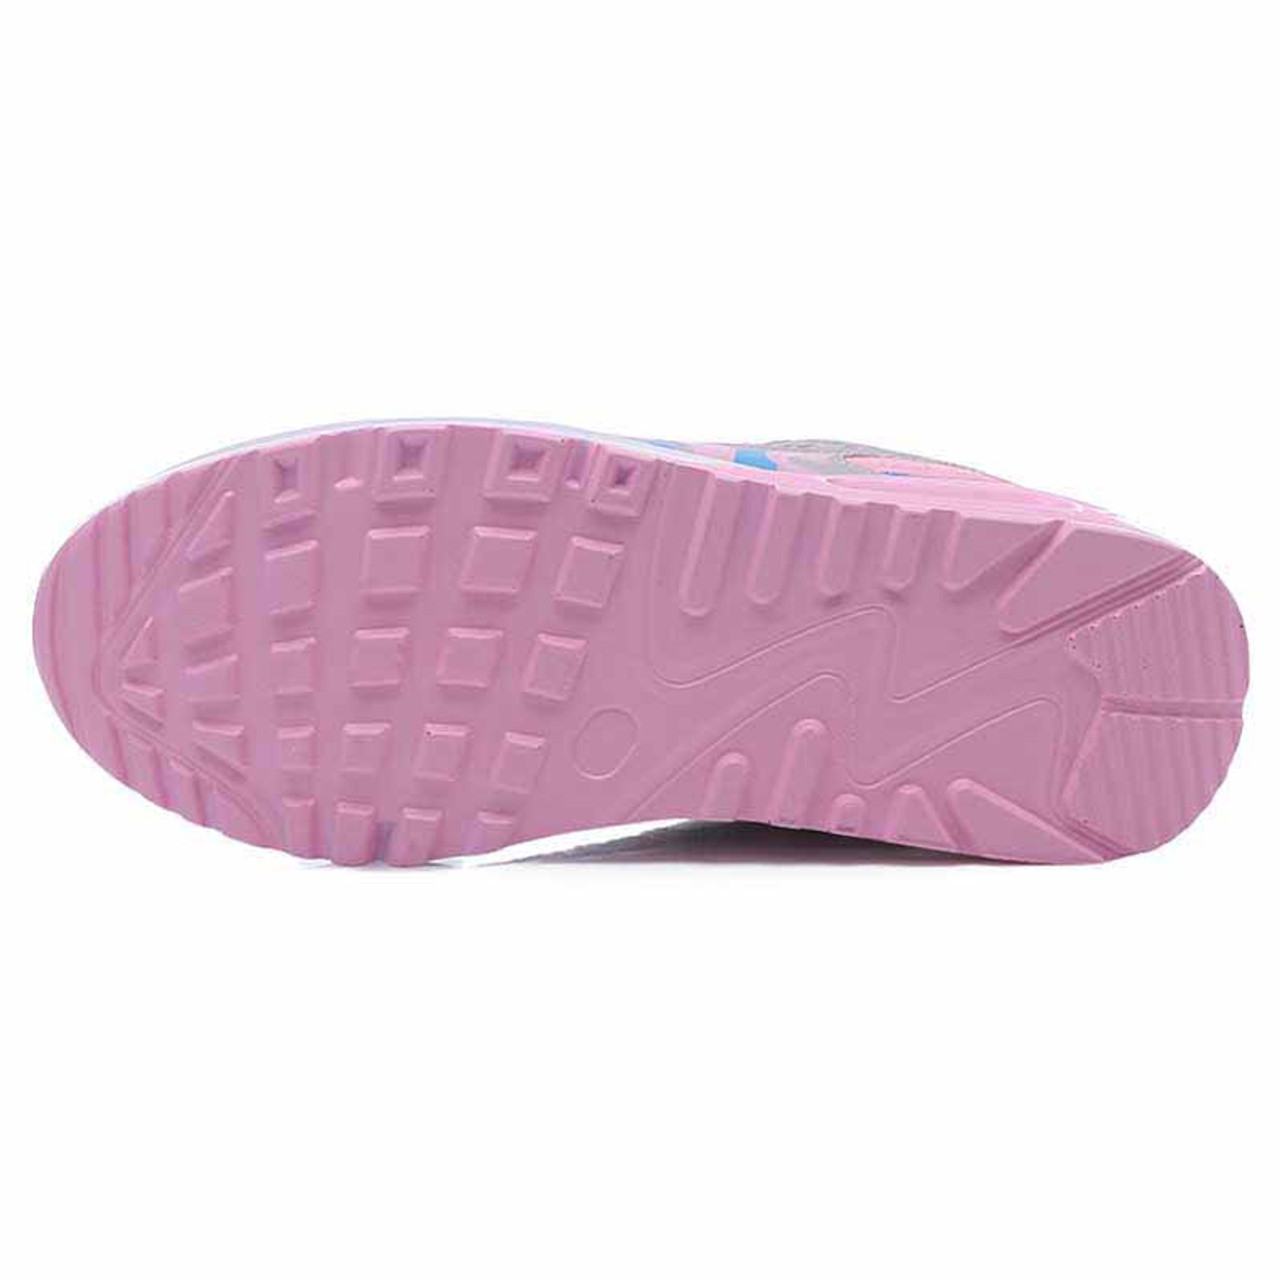 Grey pink pattern leather air sole sport shoe sneaker | Womens sneakers ...